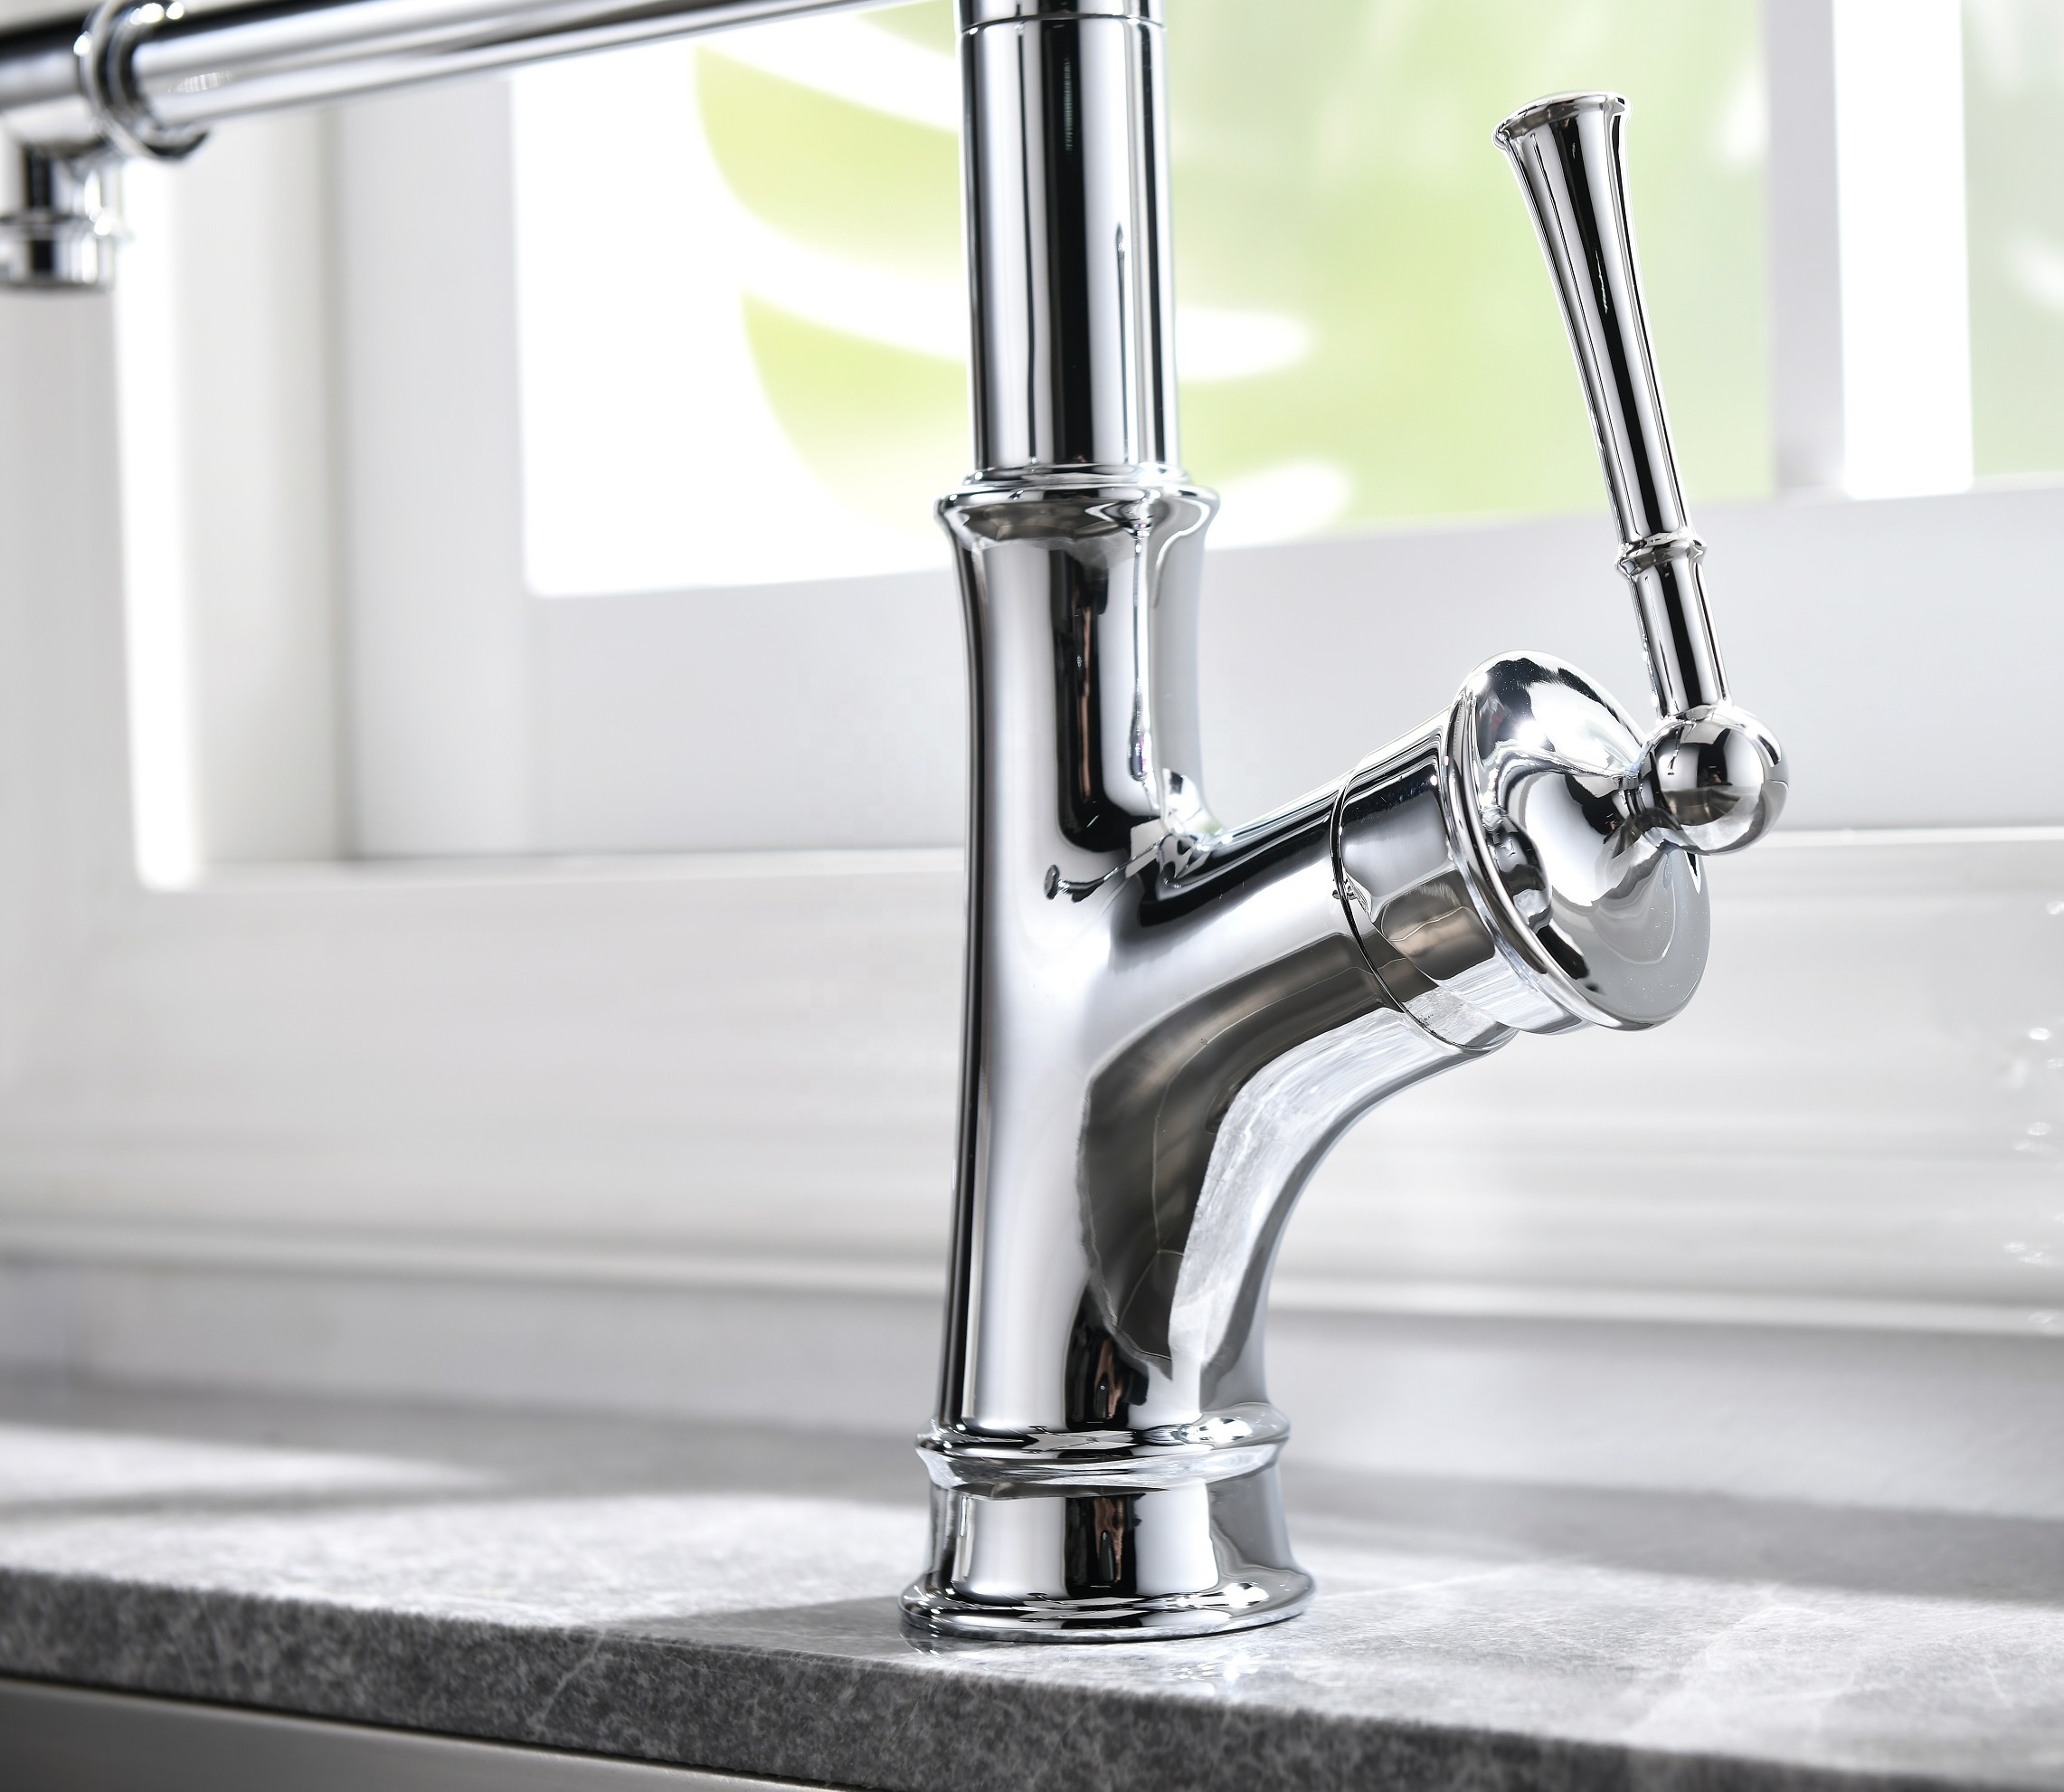 American Kitchen Faucet 360 Adjustable Flexible Kitchen Faucet Spring Pull Down Spray Kitchen Faucet